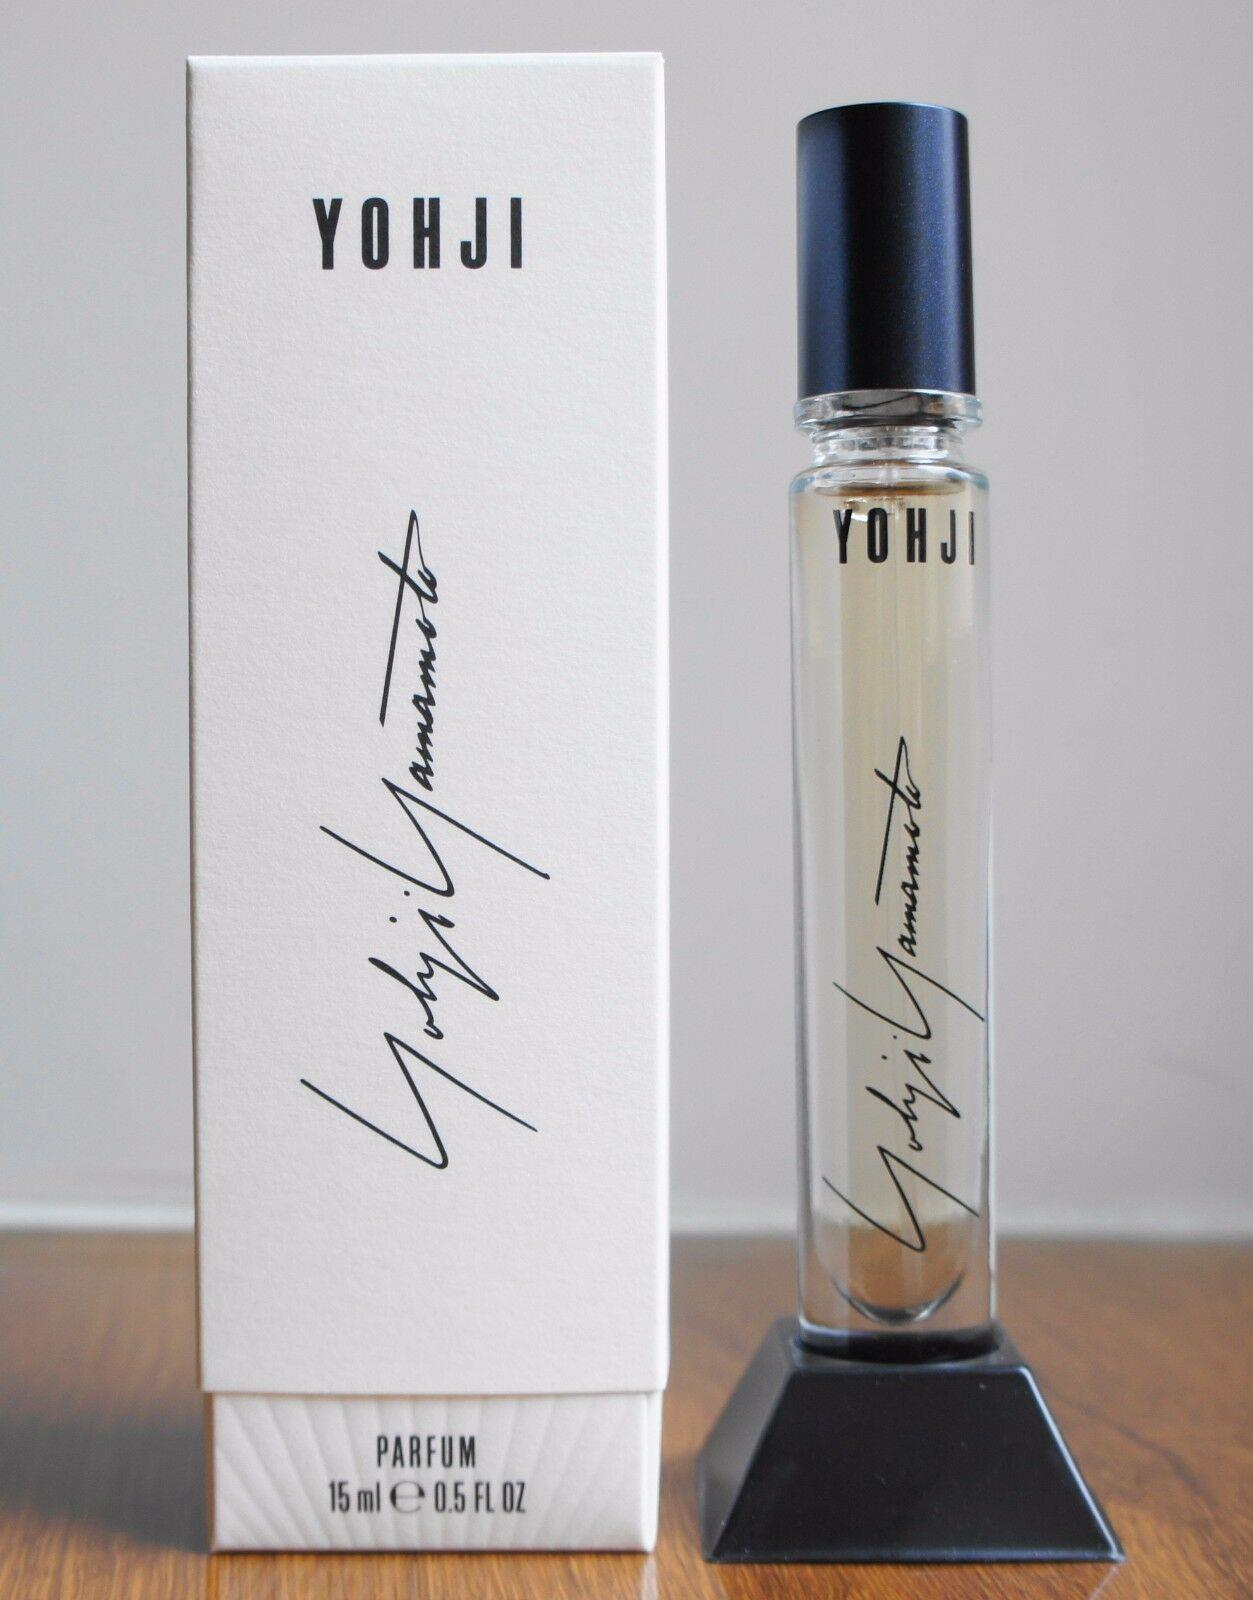 Yohji by Yohji Yamamoto for Women Parfum- Decanted Fragrances and